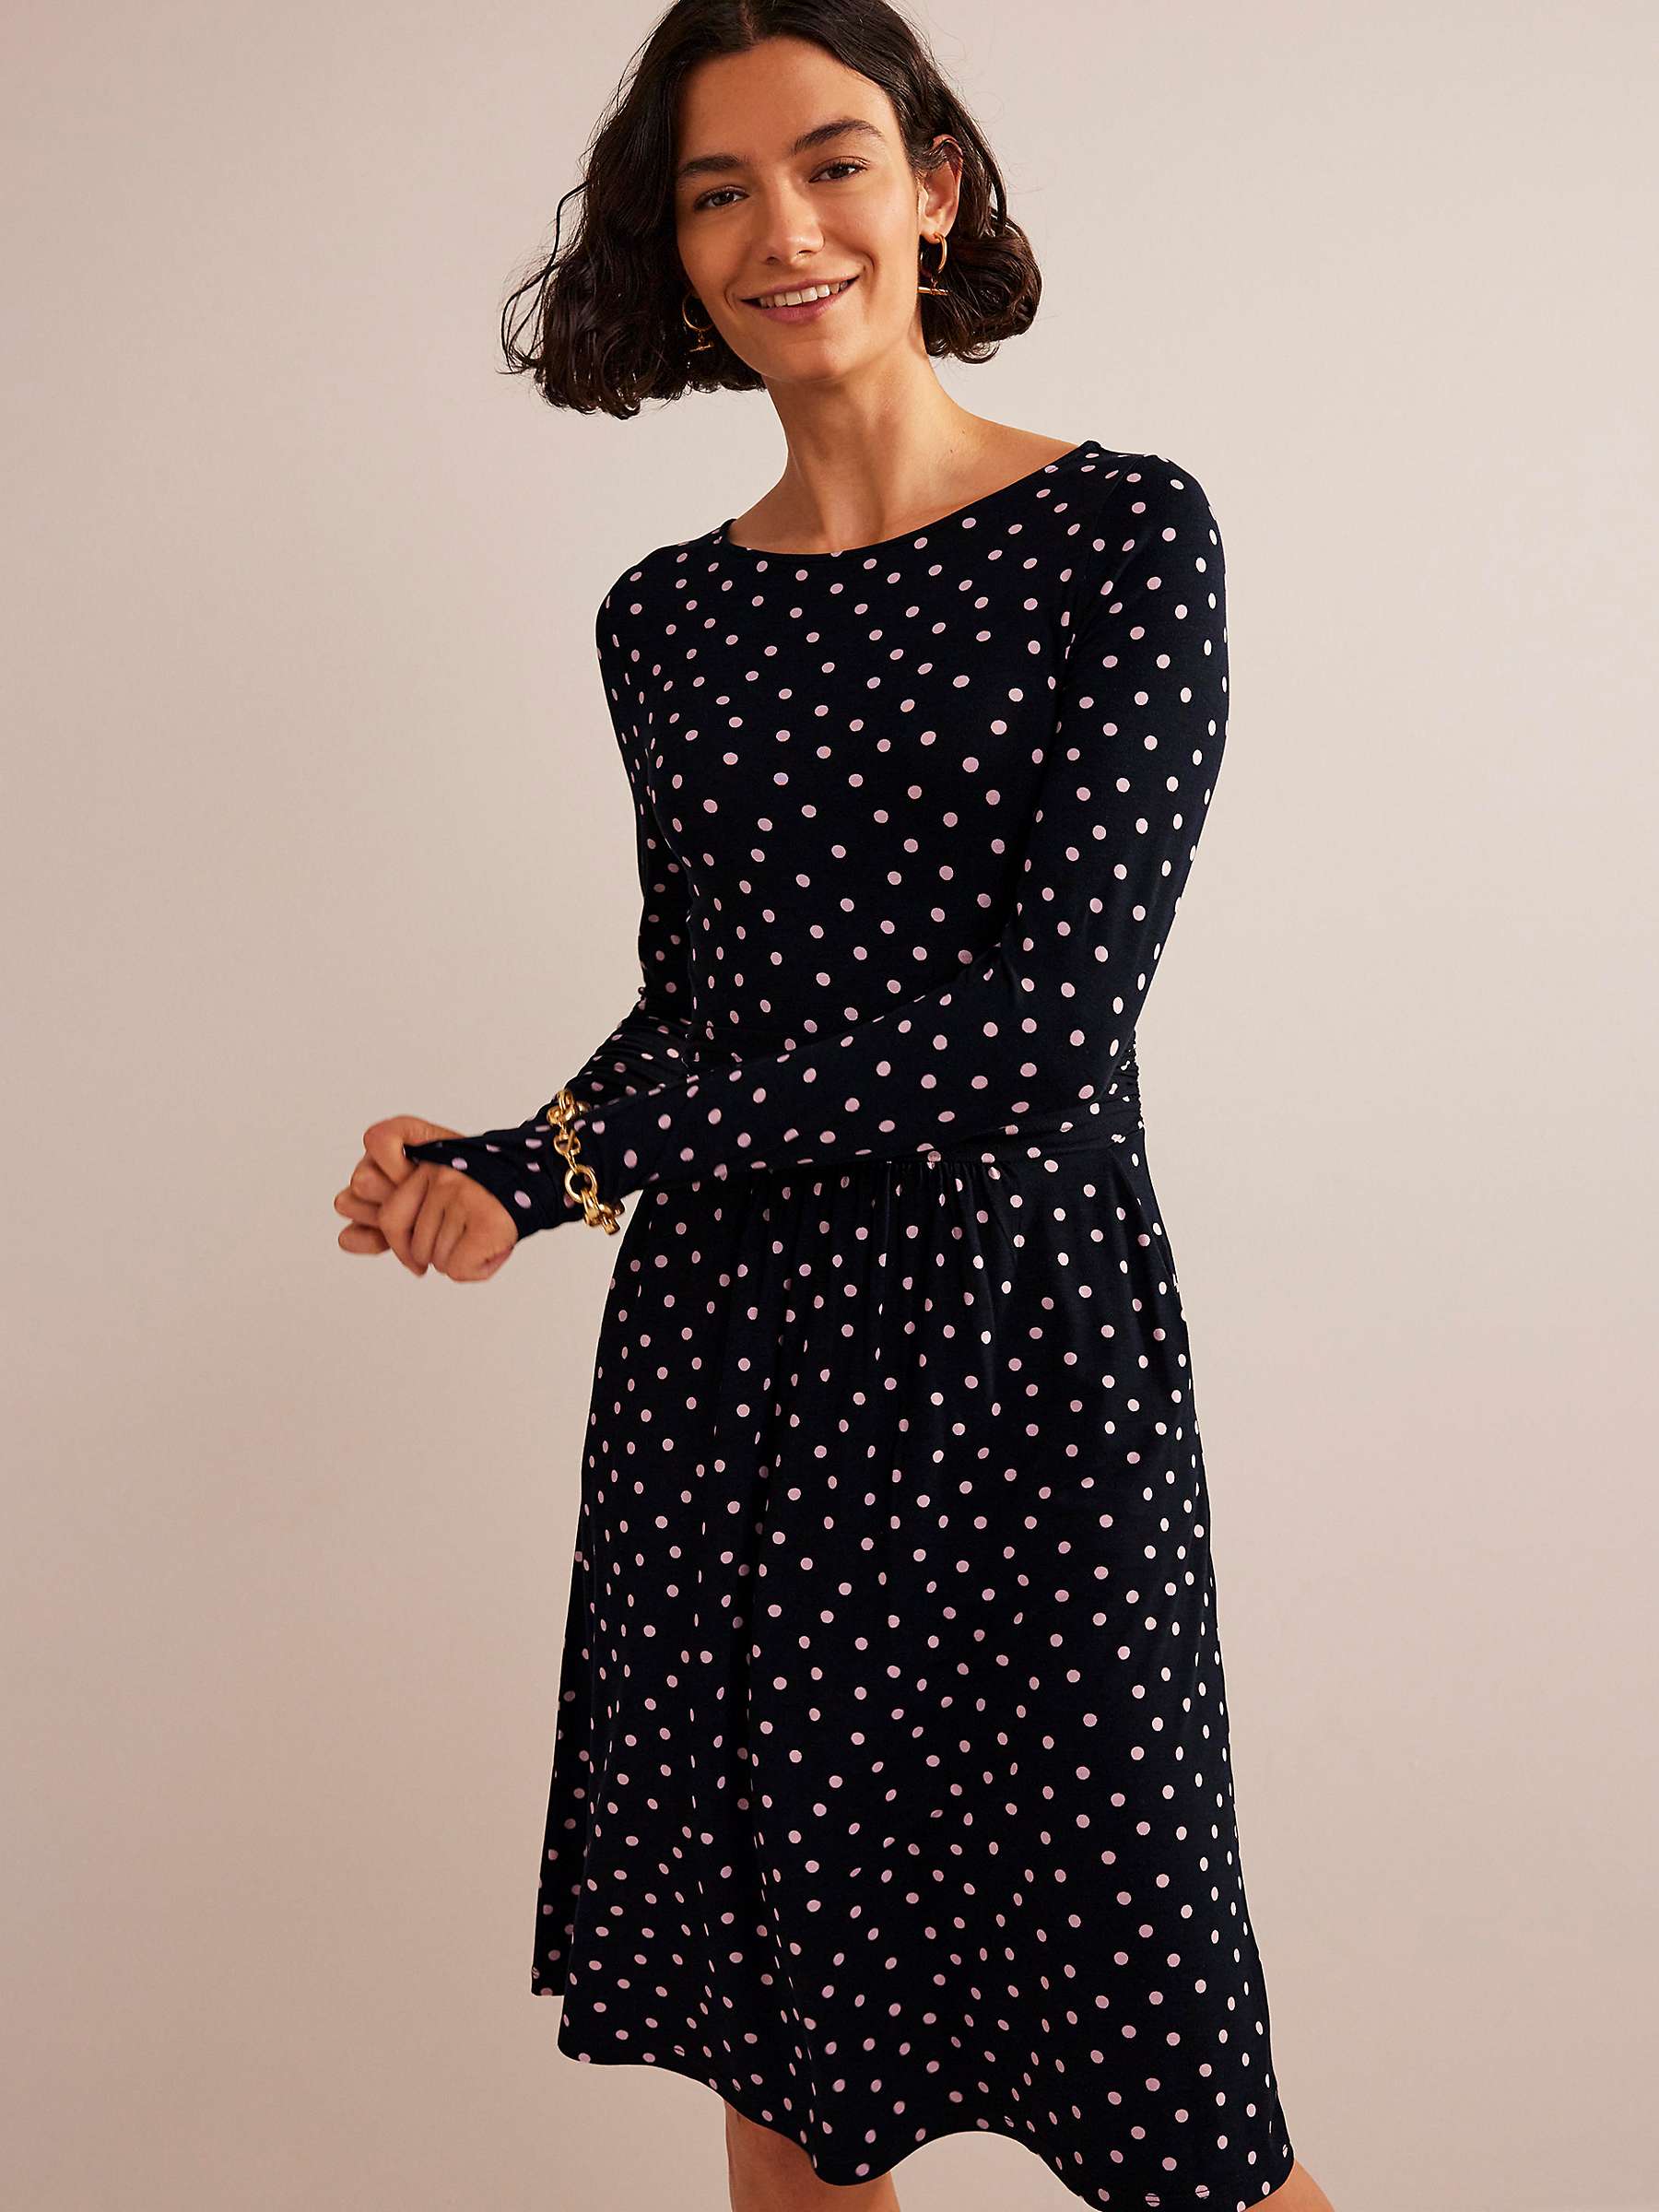 Buy Boden Abigail Spot Ecovero Jersey Dress, Black/Milkshake Spot Online at johnlewis.com